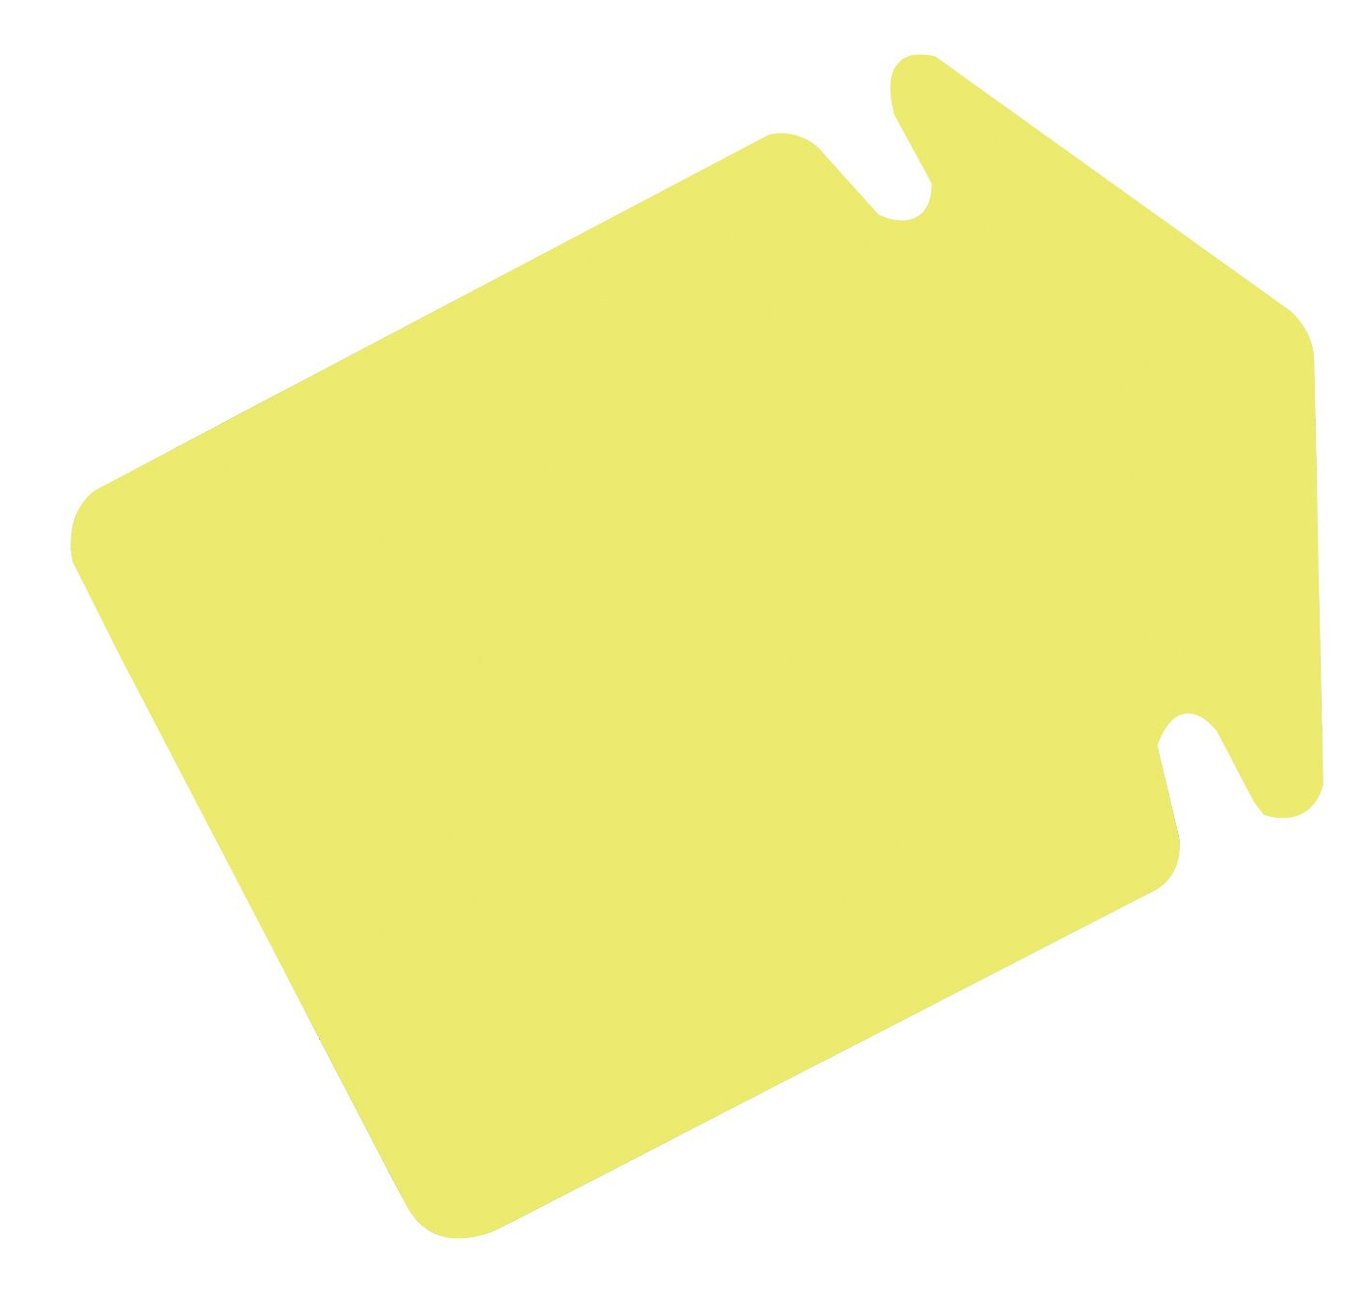 Skyltkartong Pil mellan fluor gul 23 x 16,5 cm 17060003